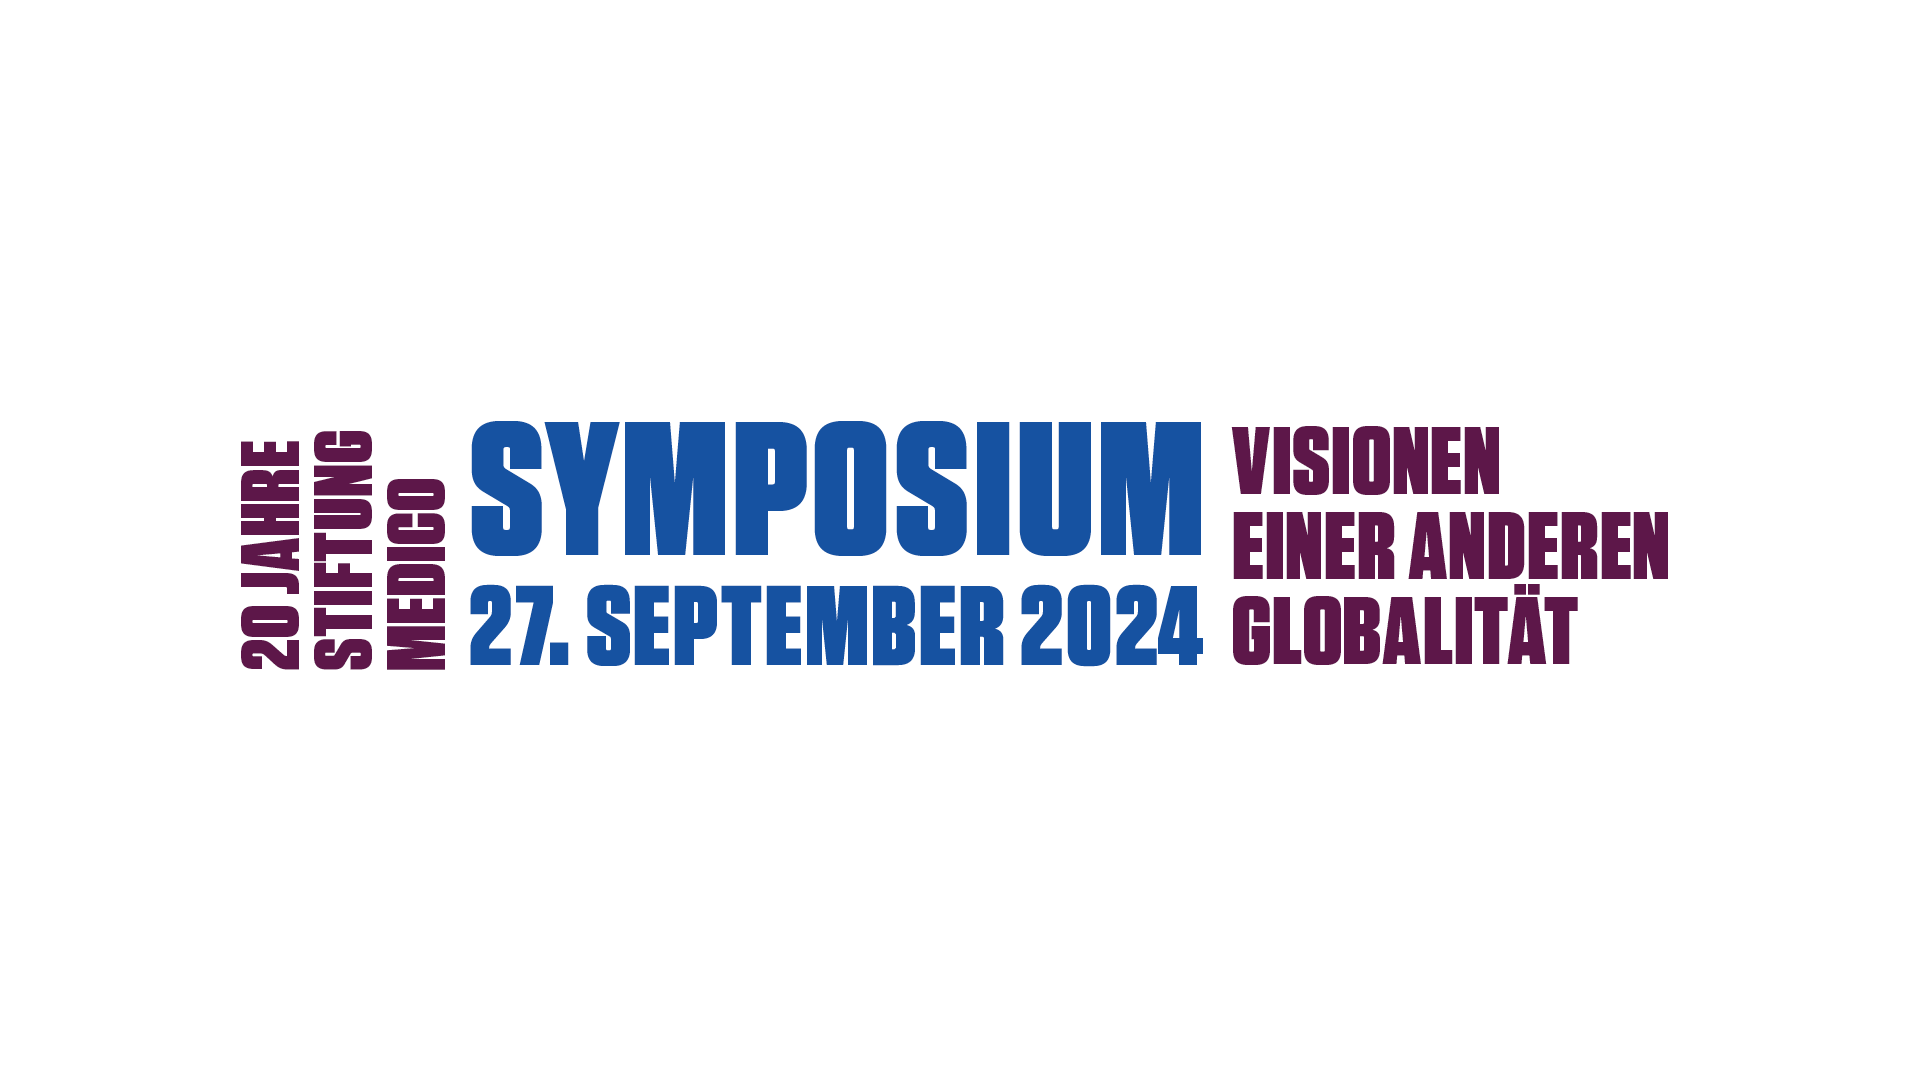 Symposium 2024 der Stiftung medico international 